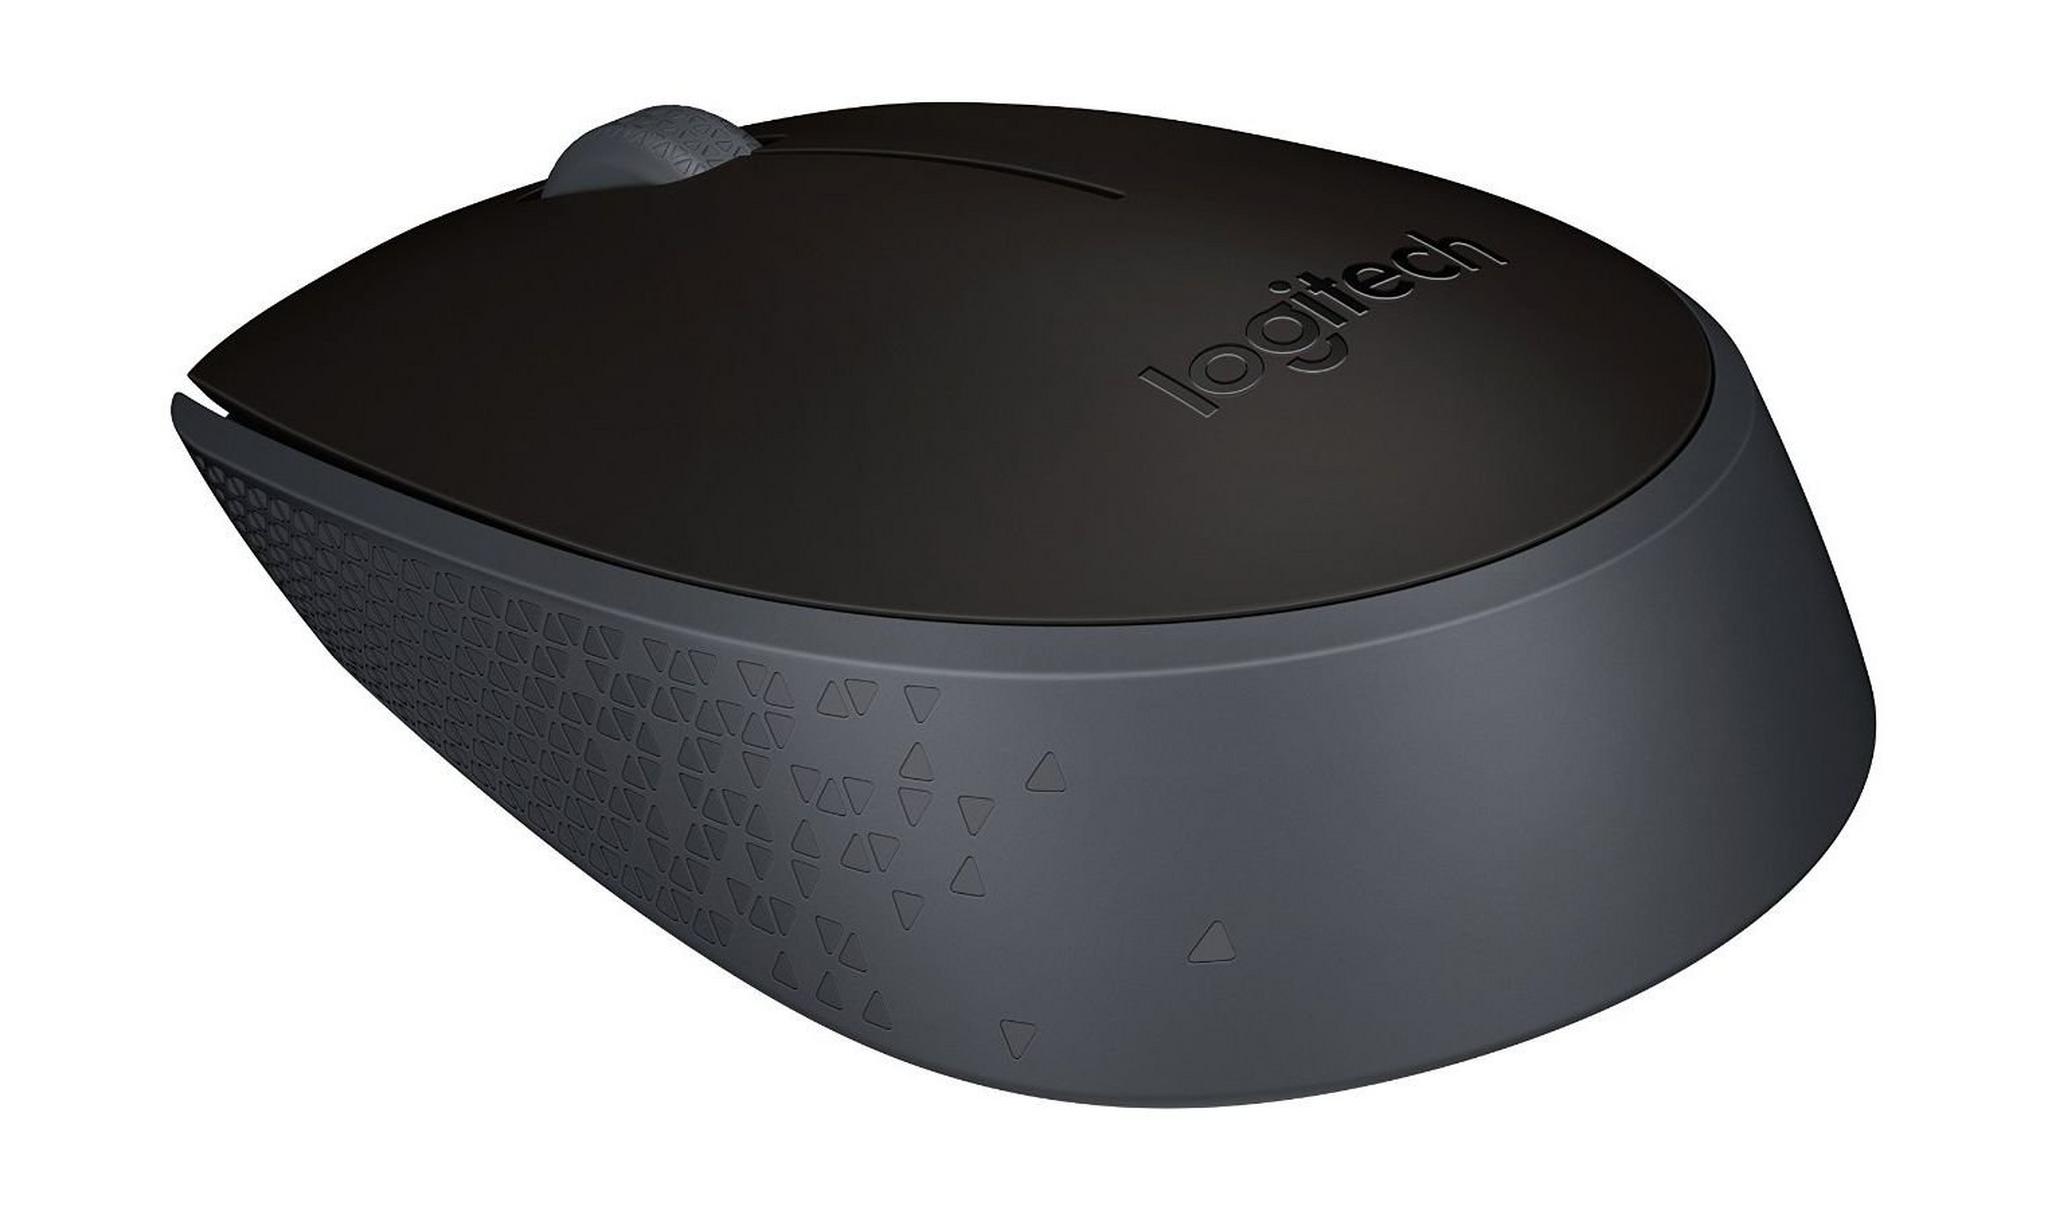 Logitech M171 Optical Wireless Mouse - Black